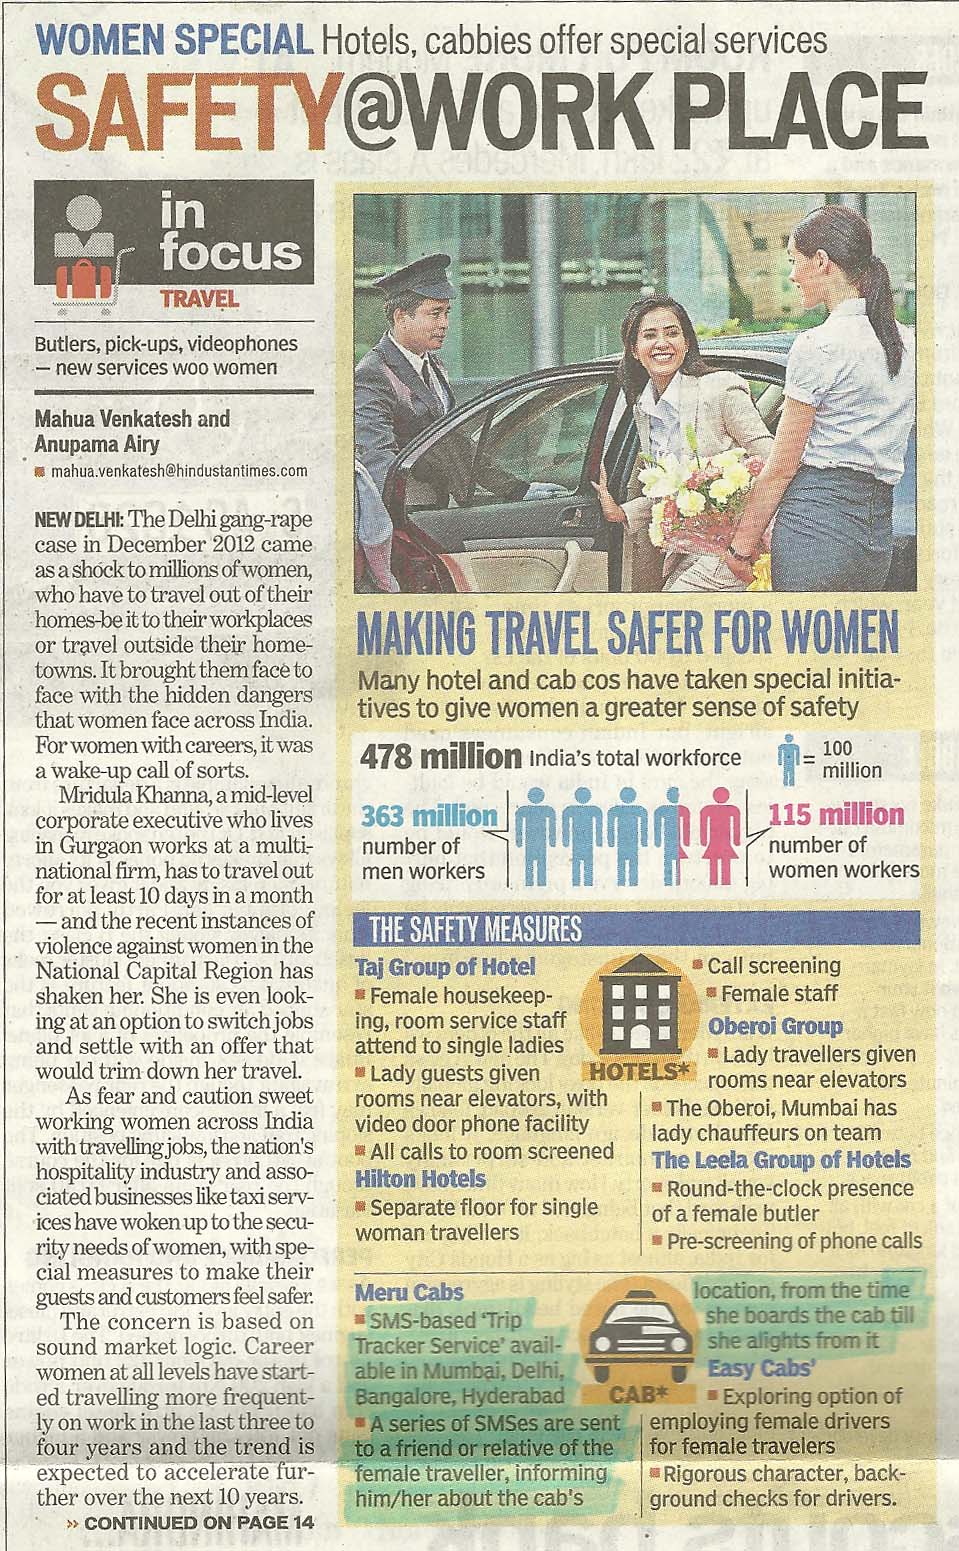 Hindustan Times, Mumbai/Delhi - Safety @ Work Place